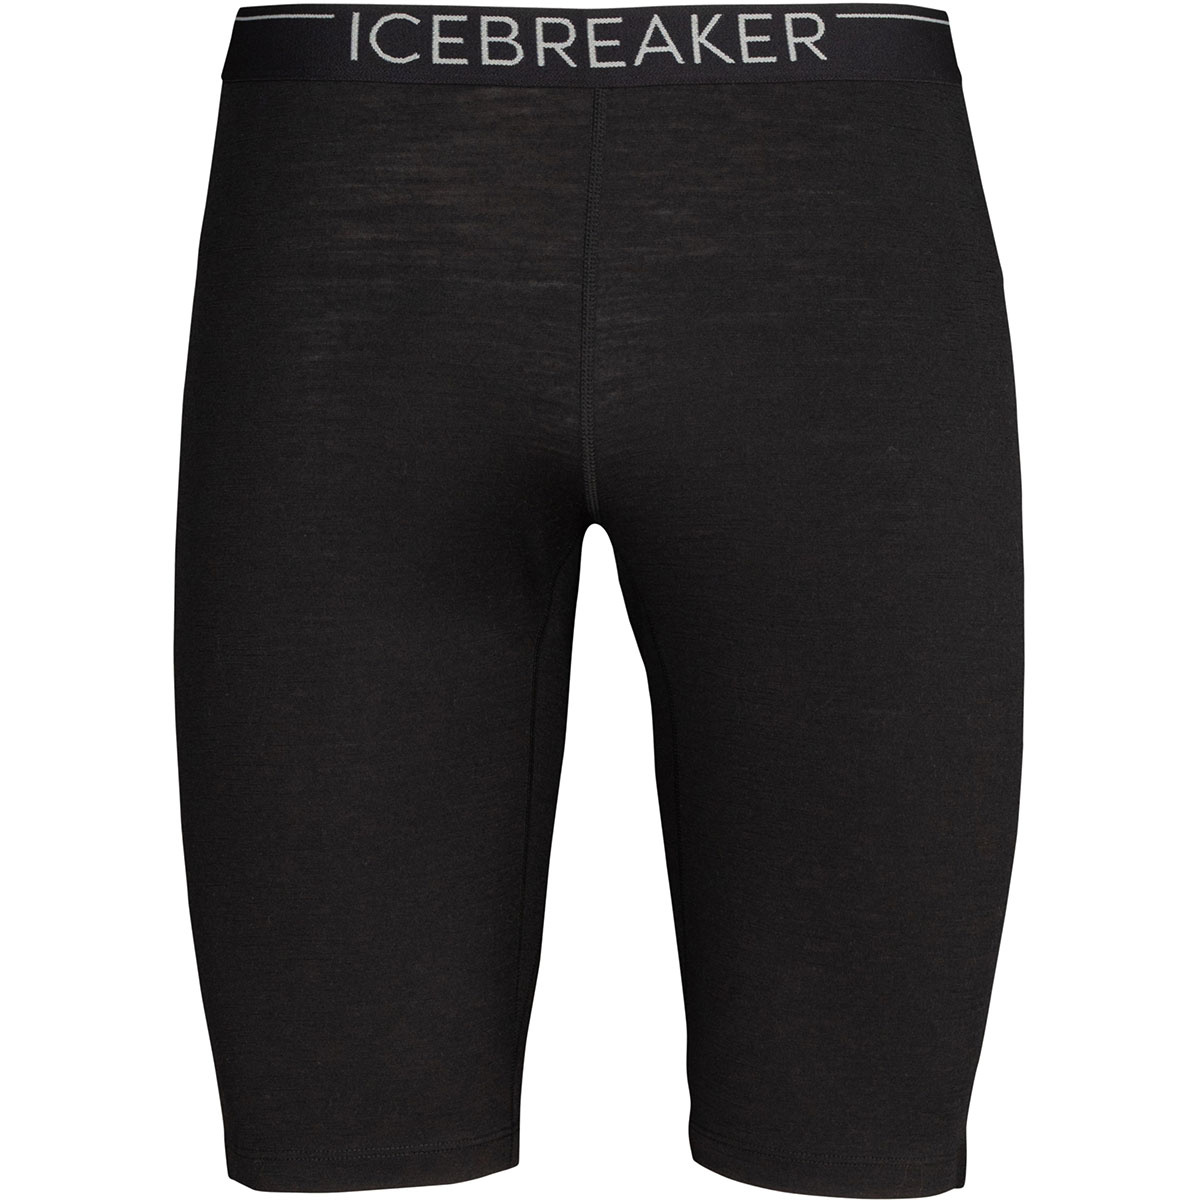 Image of Icebreaker Uomo Mutande 200 Oasis